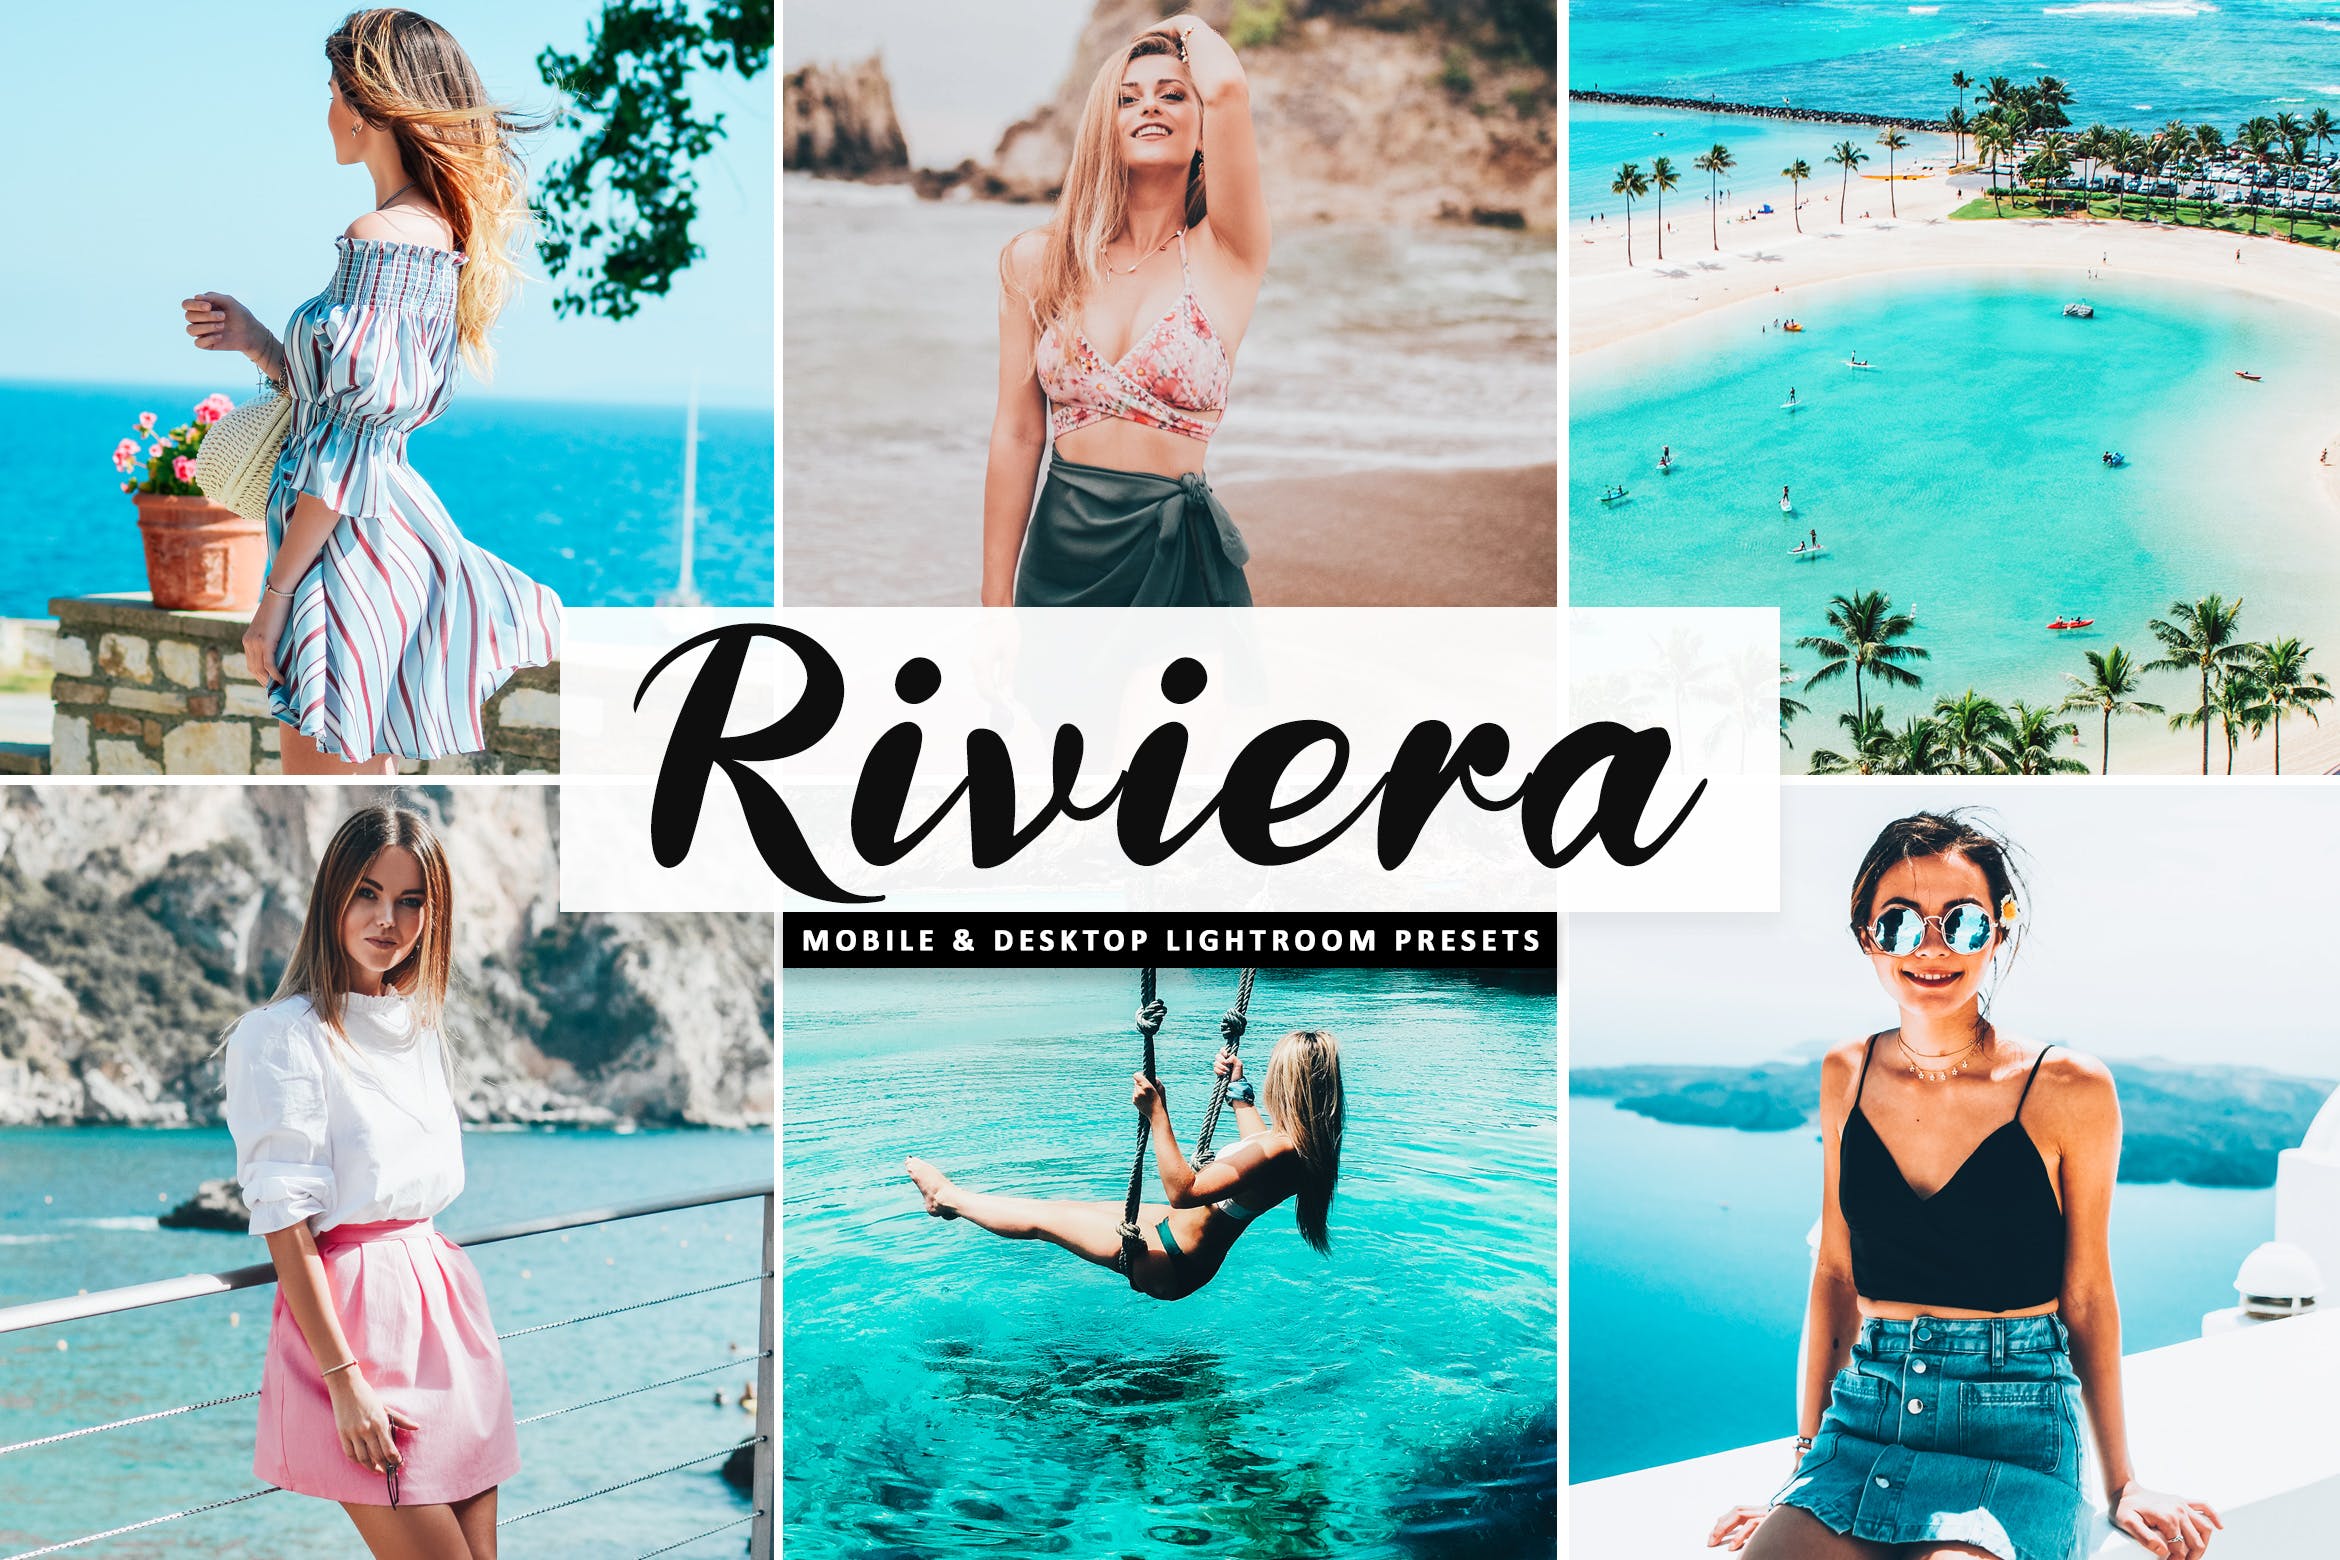 夏日沙滩&海边摄影LR调色预设 Riviera Mobile & Desktop Lightroom Presets插图